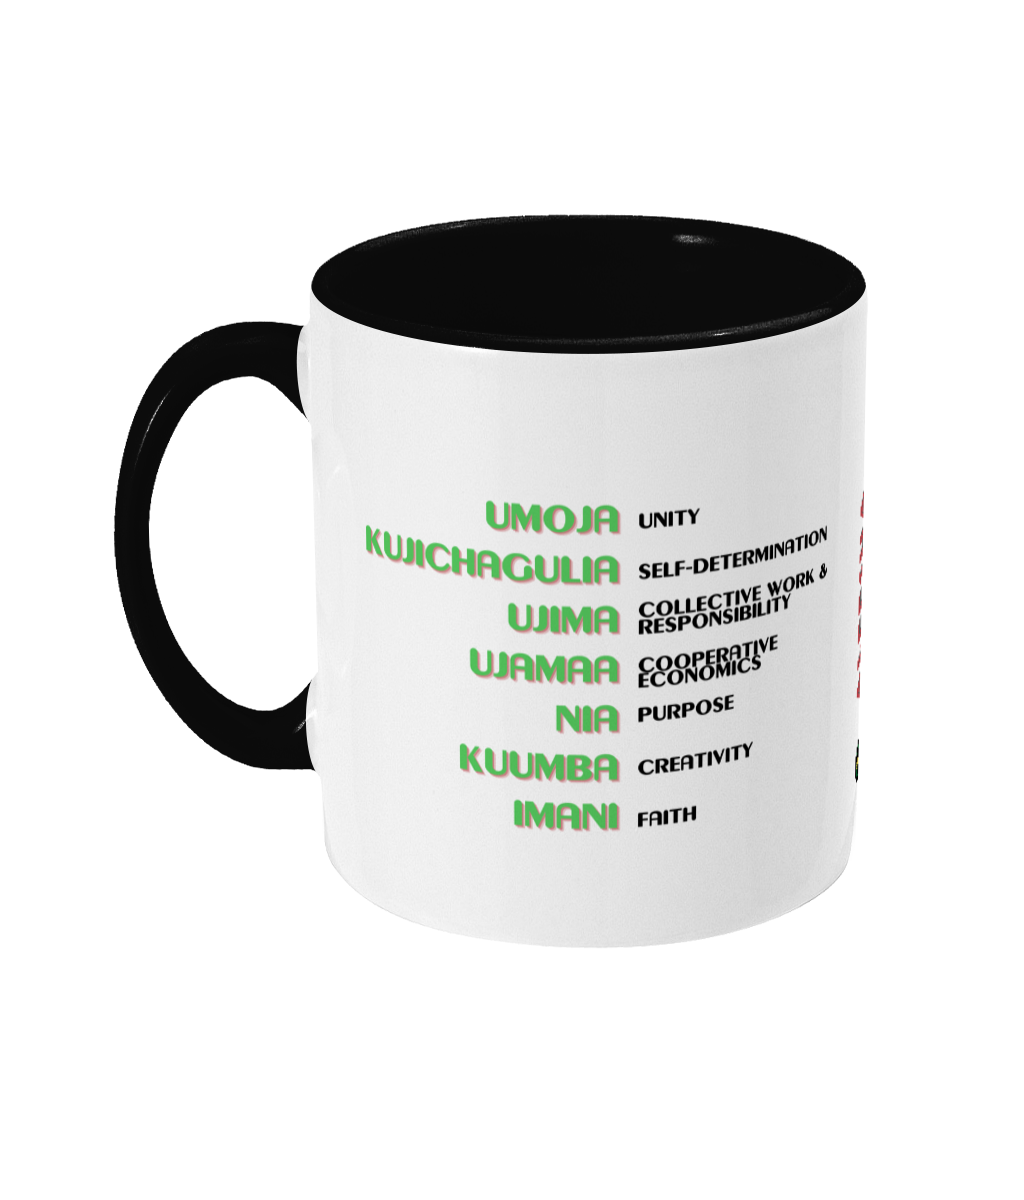 Personalised Mug | Kwanzaa Blessings